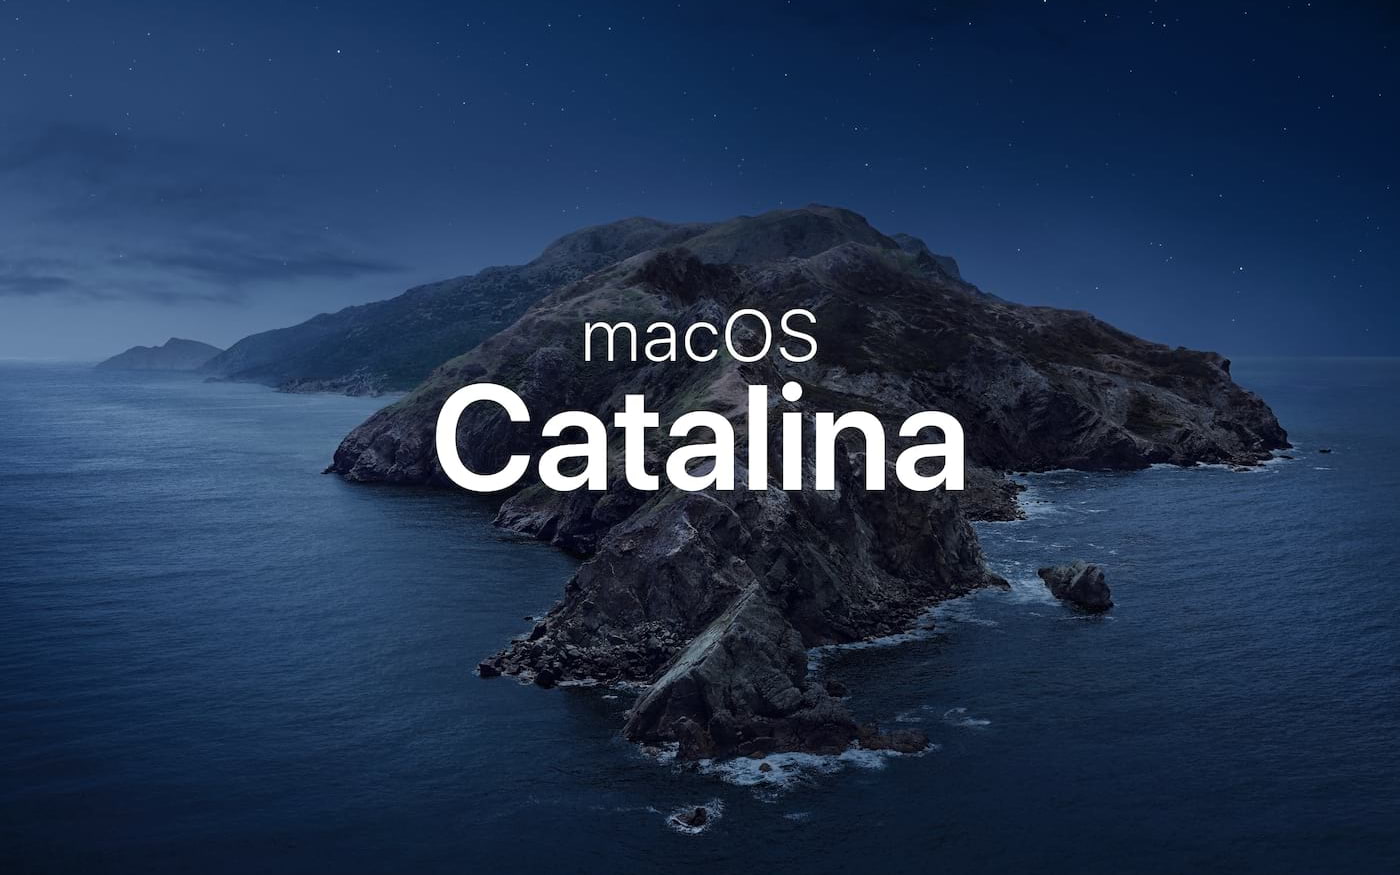 macos catalina direct download